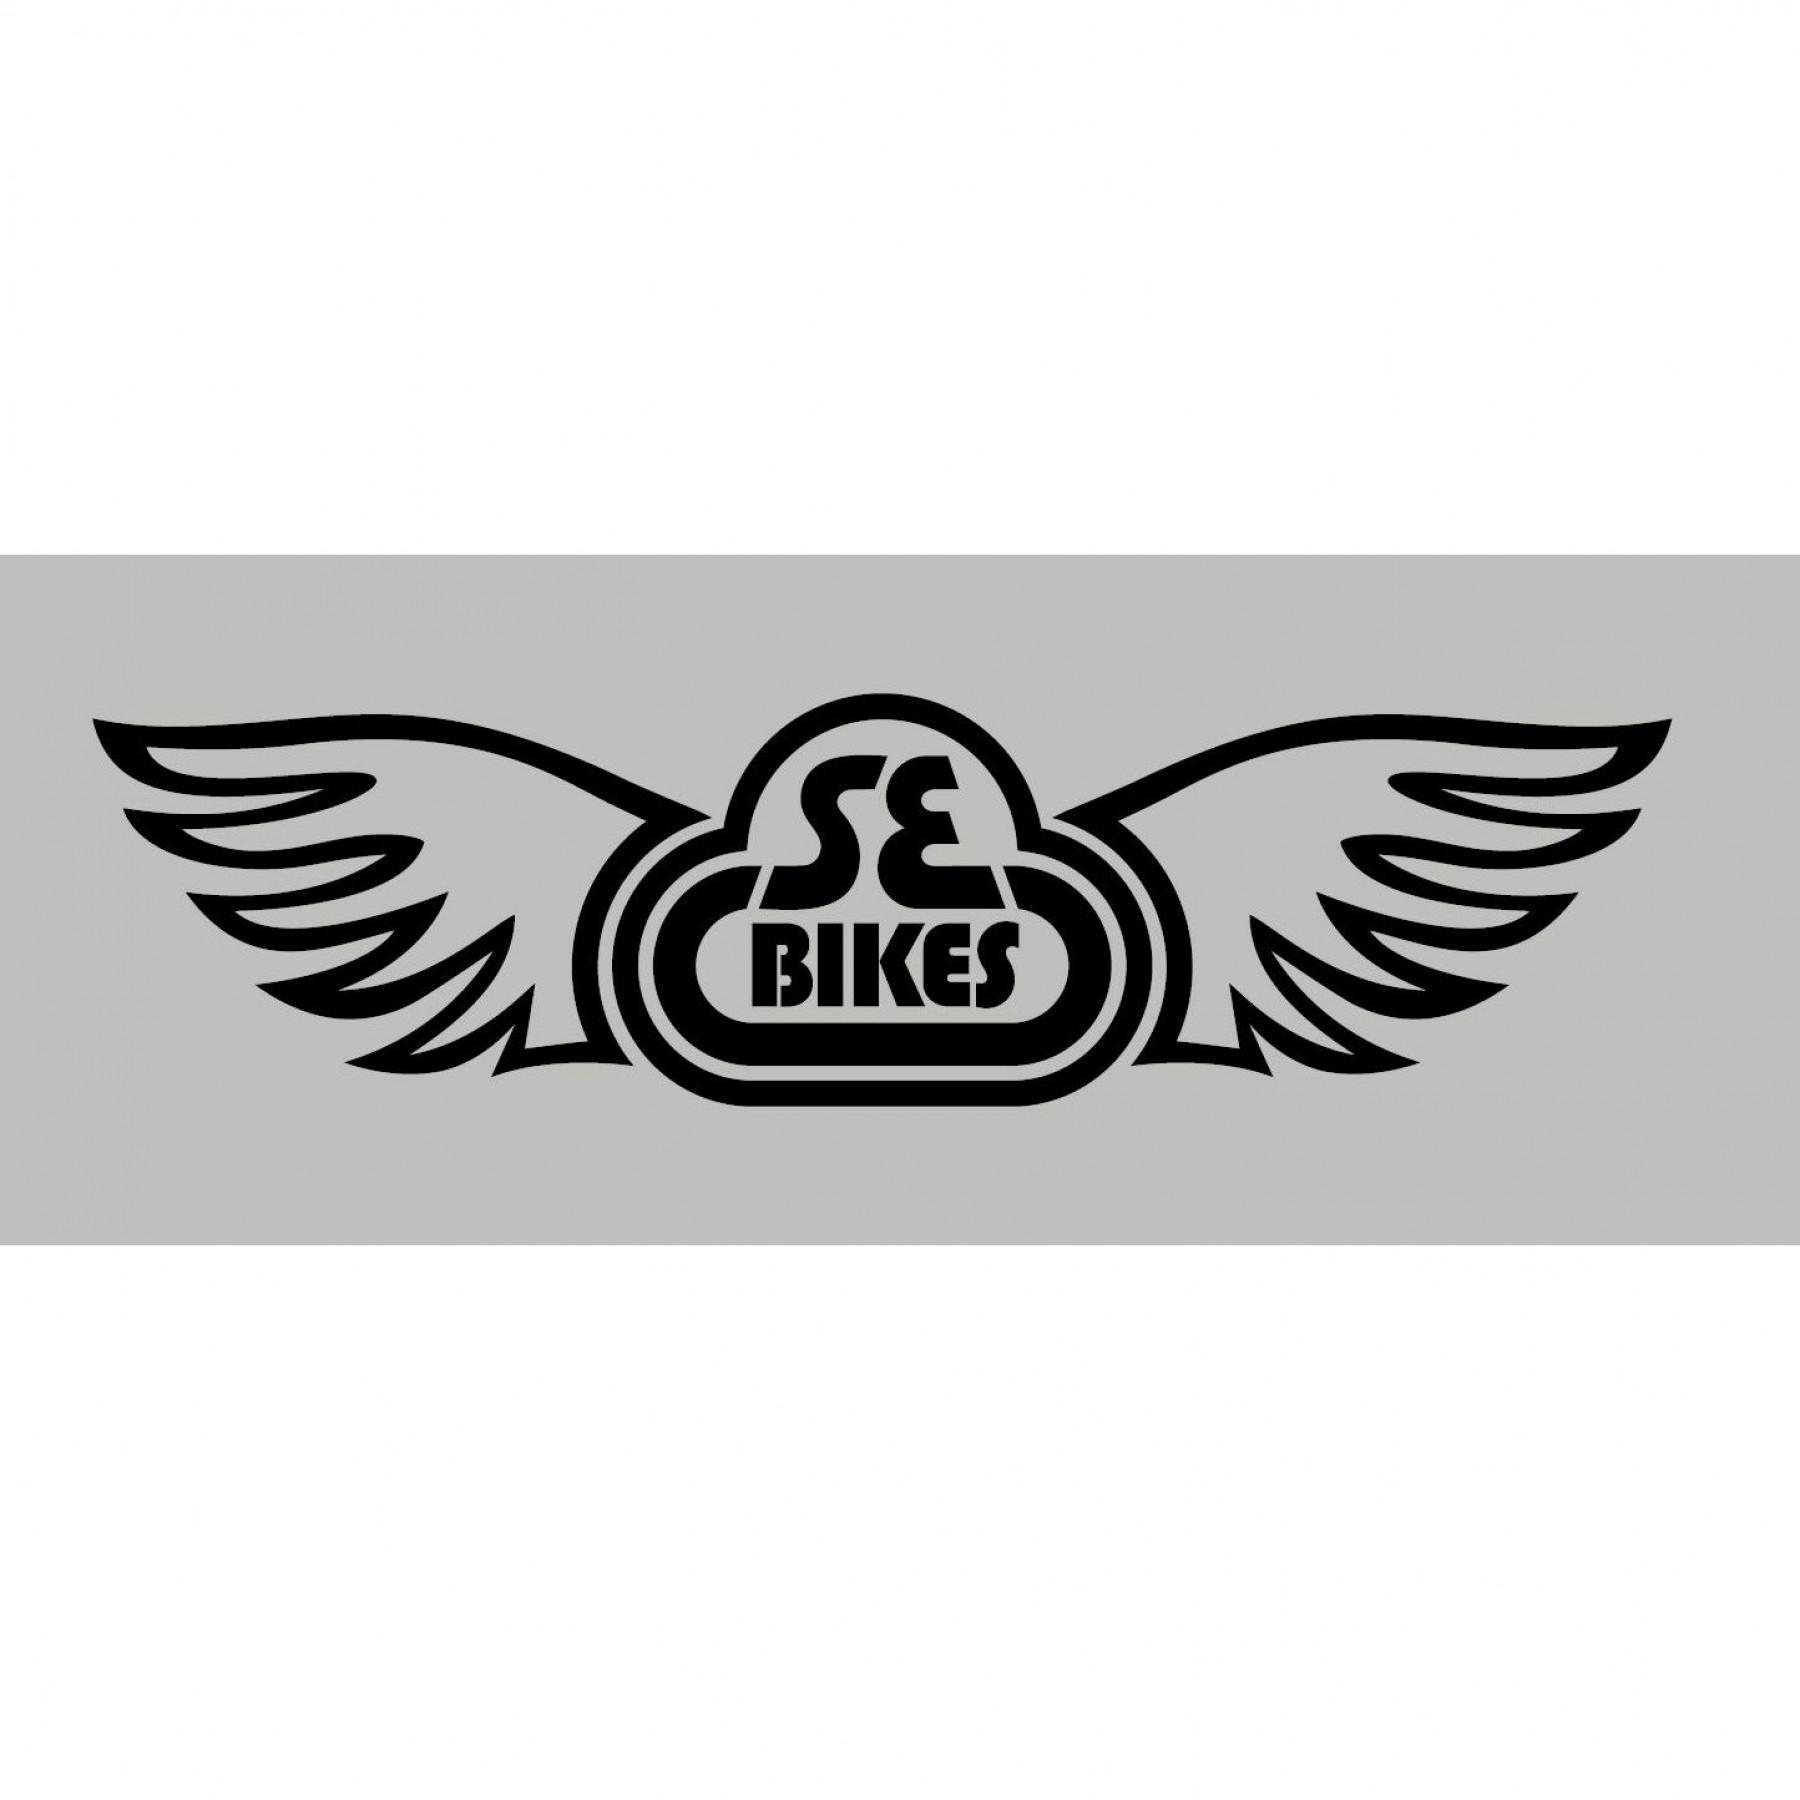 Sticker SE bikes Wing